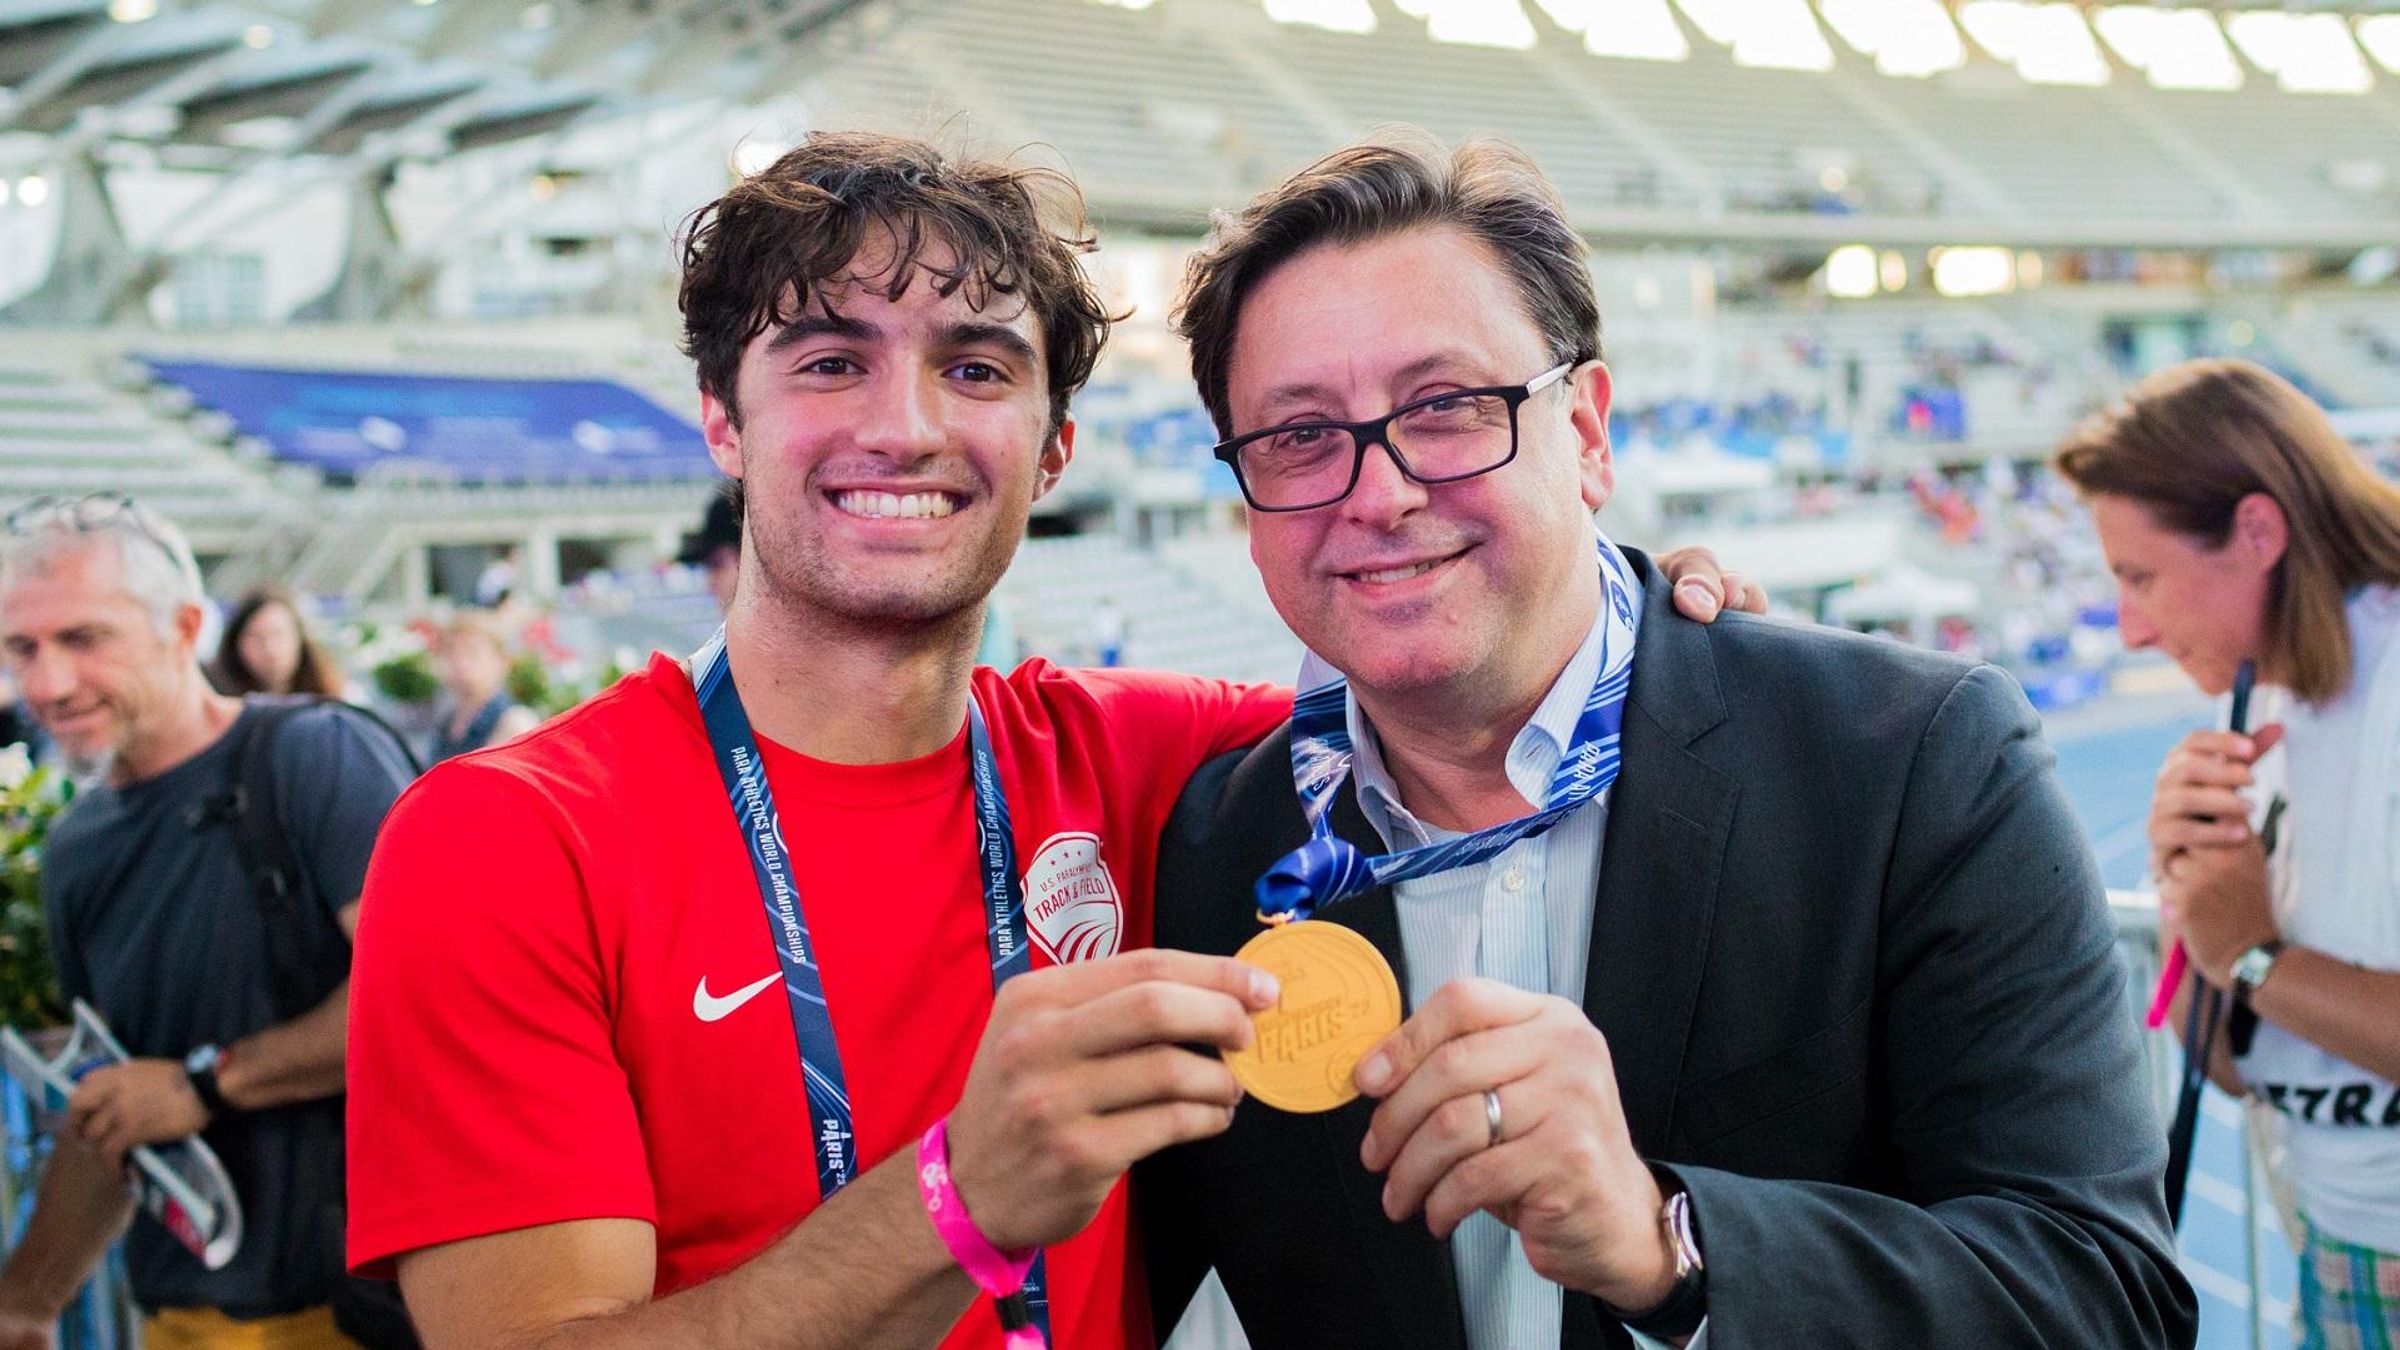 Sanofi CEO Paul Hudson and Ezra Frech, American Athlete from Team Sanofi, celebrating Ezra’s gold medal at World Para-Athletics Championship in Paris, July 2023.